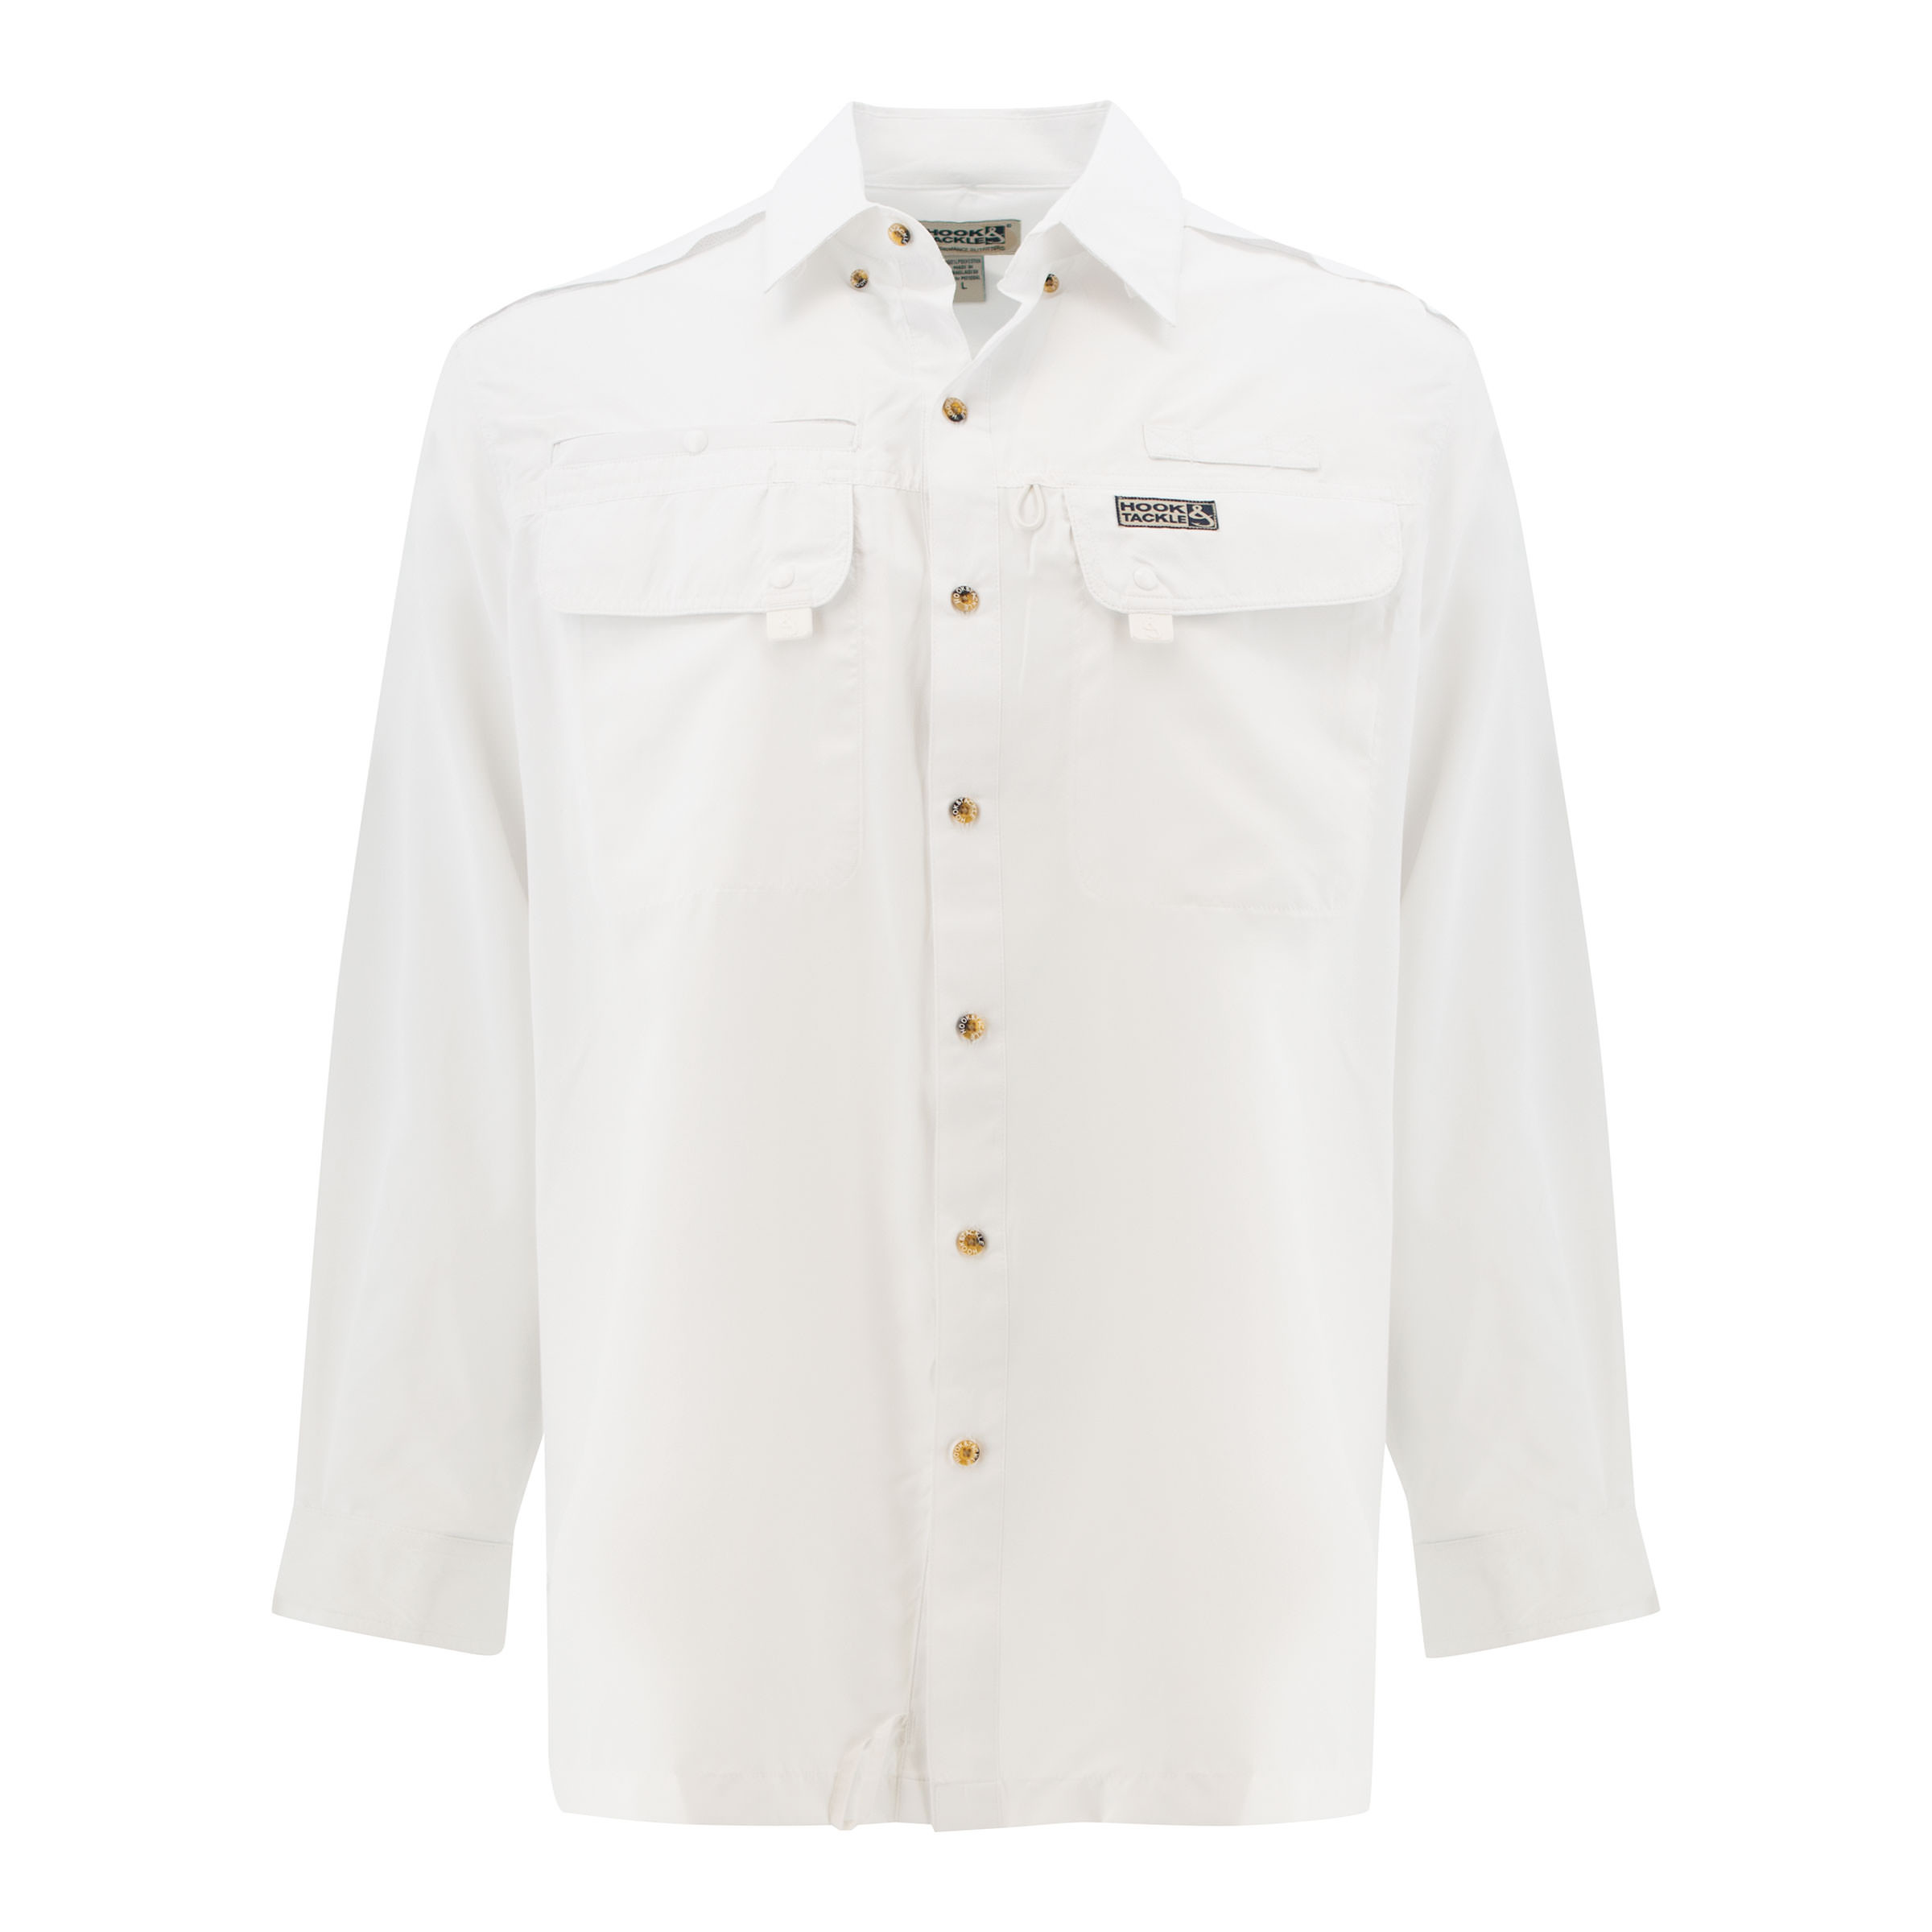 Hook & Tackle Seacliff 2.0 Long Sleeve Shirt - Men's White Size Large